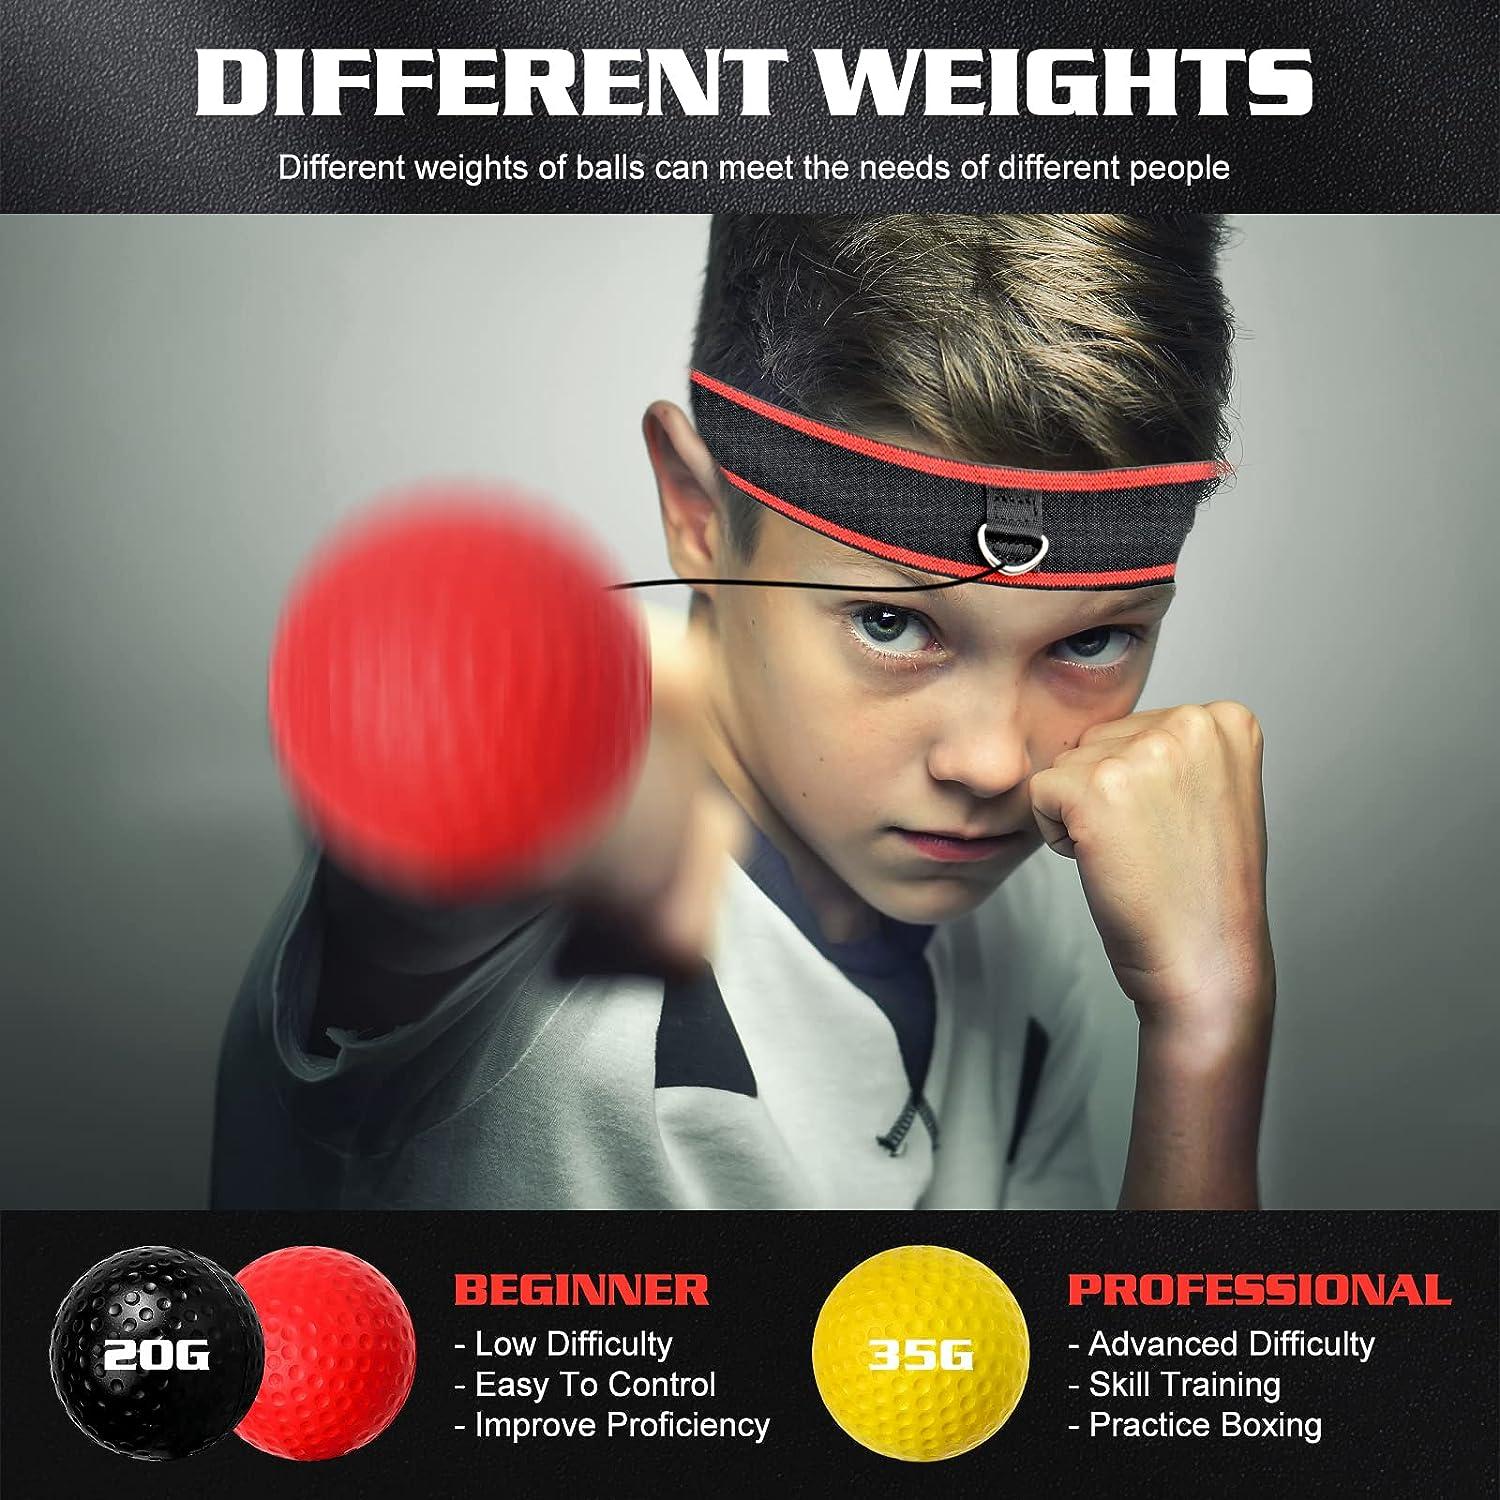 KTEBO Boxing Reflex Ball Headband Set, Boxballen Game Boxing Equipment,  Include 4 Different Boxball and 2